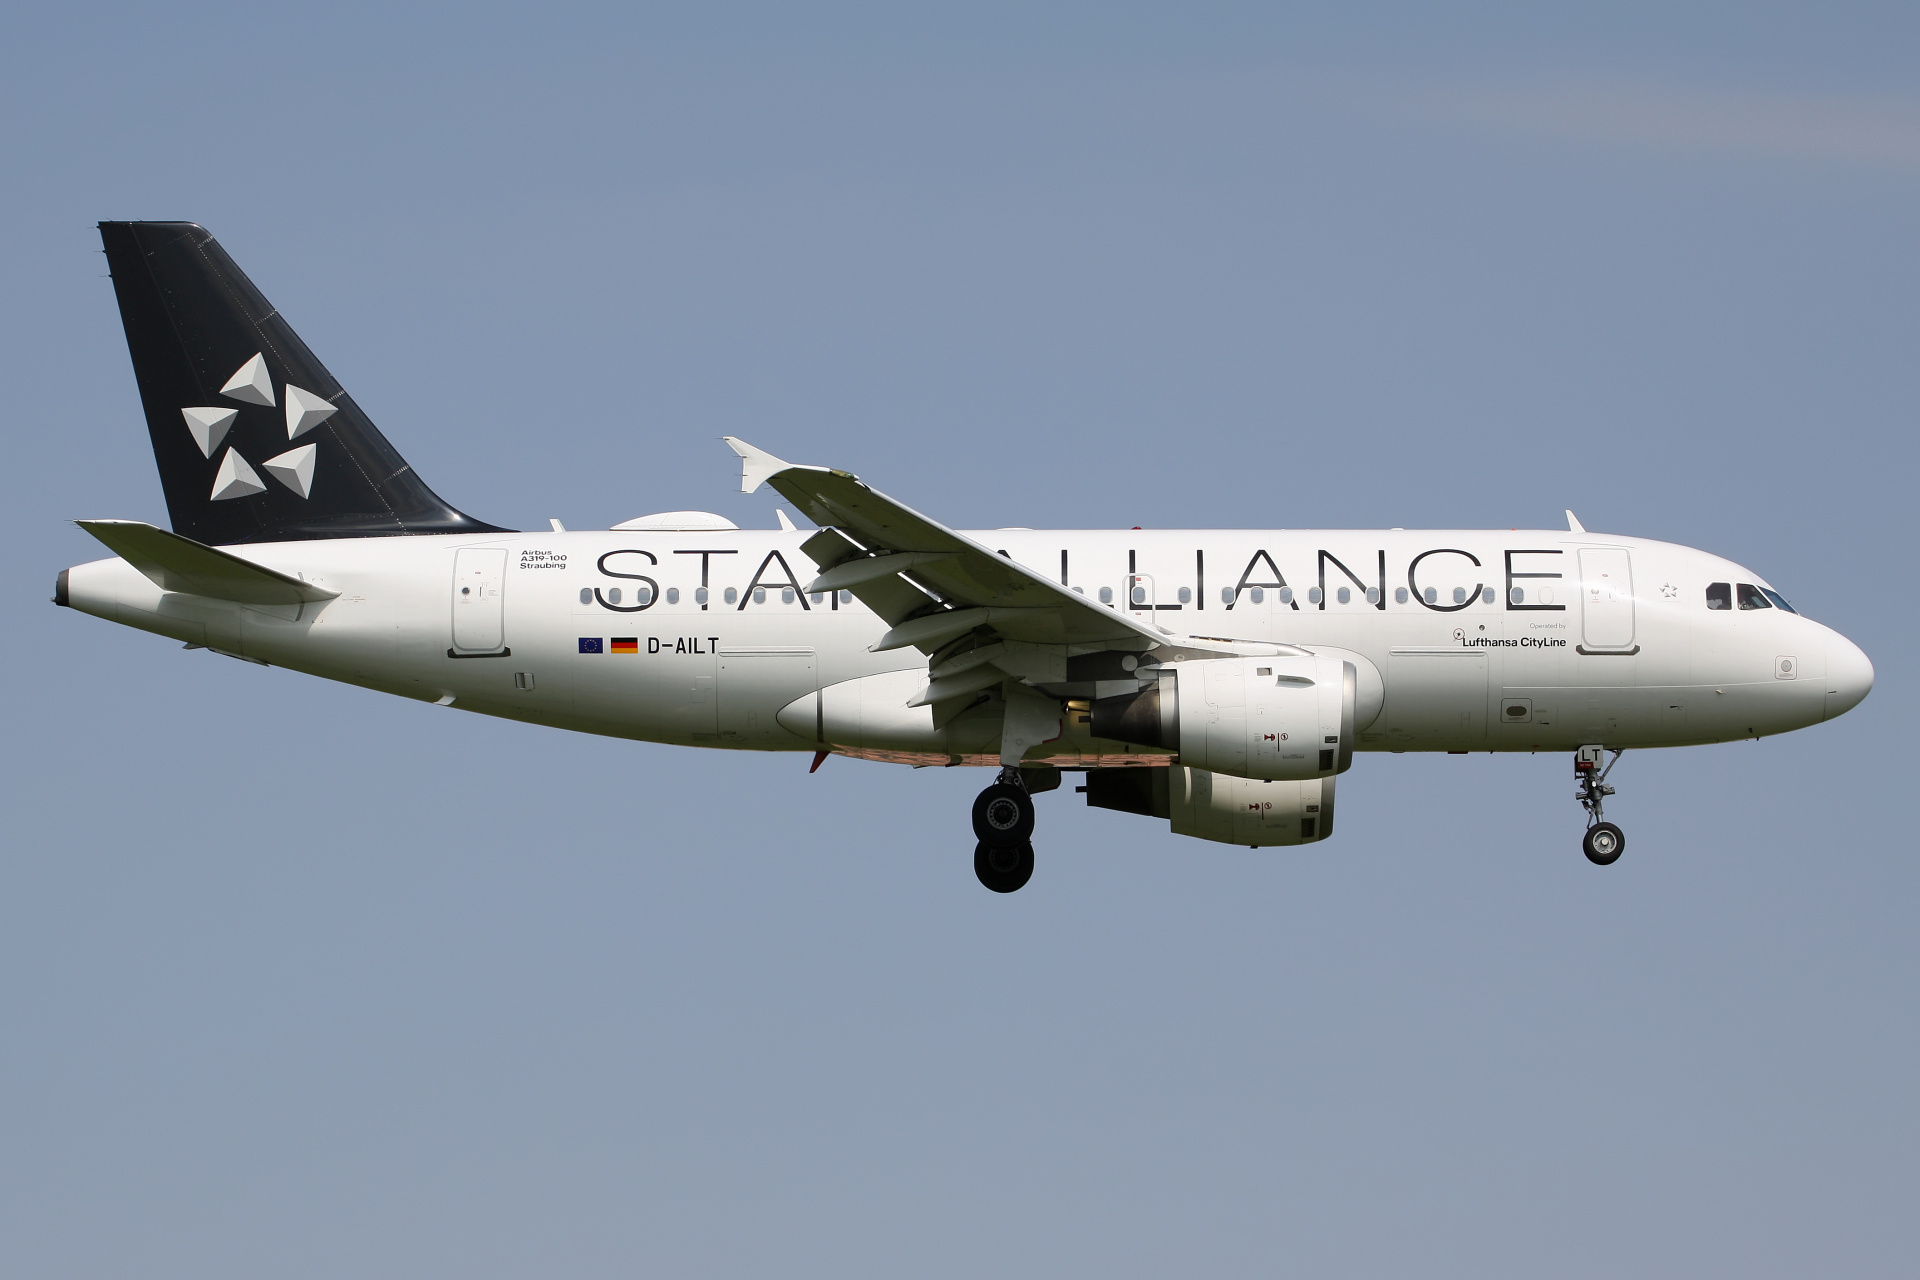 D-AILT, Lufthansa CityLine (Star Alliance livery) (Aircraft » EPWA Spotting » Airbus A319-100 » Lufthansa)